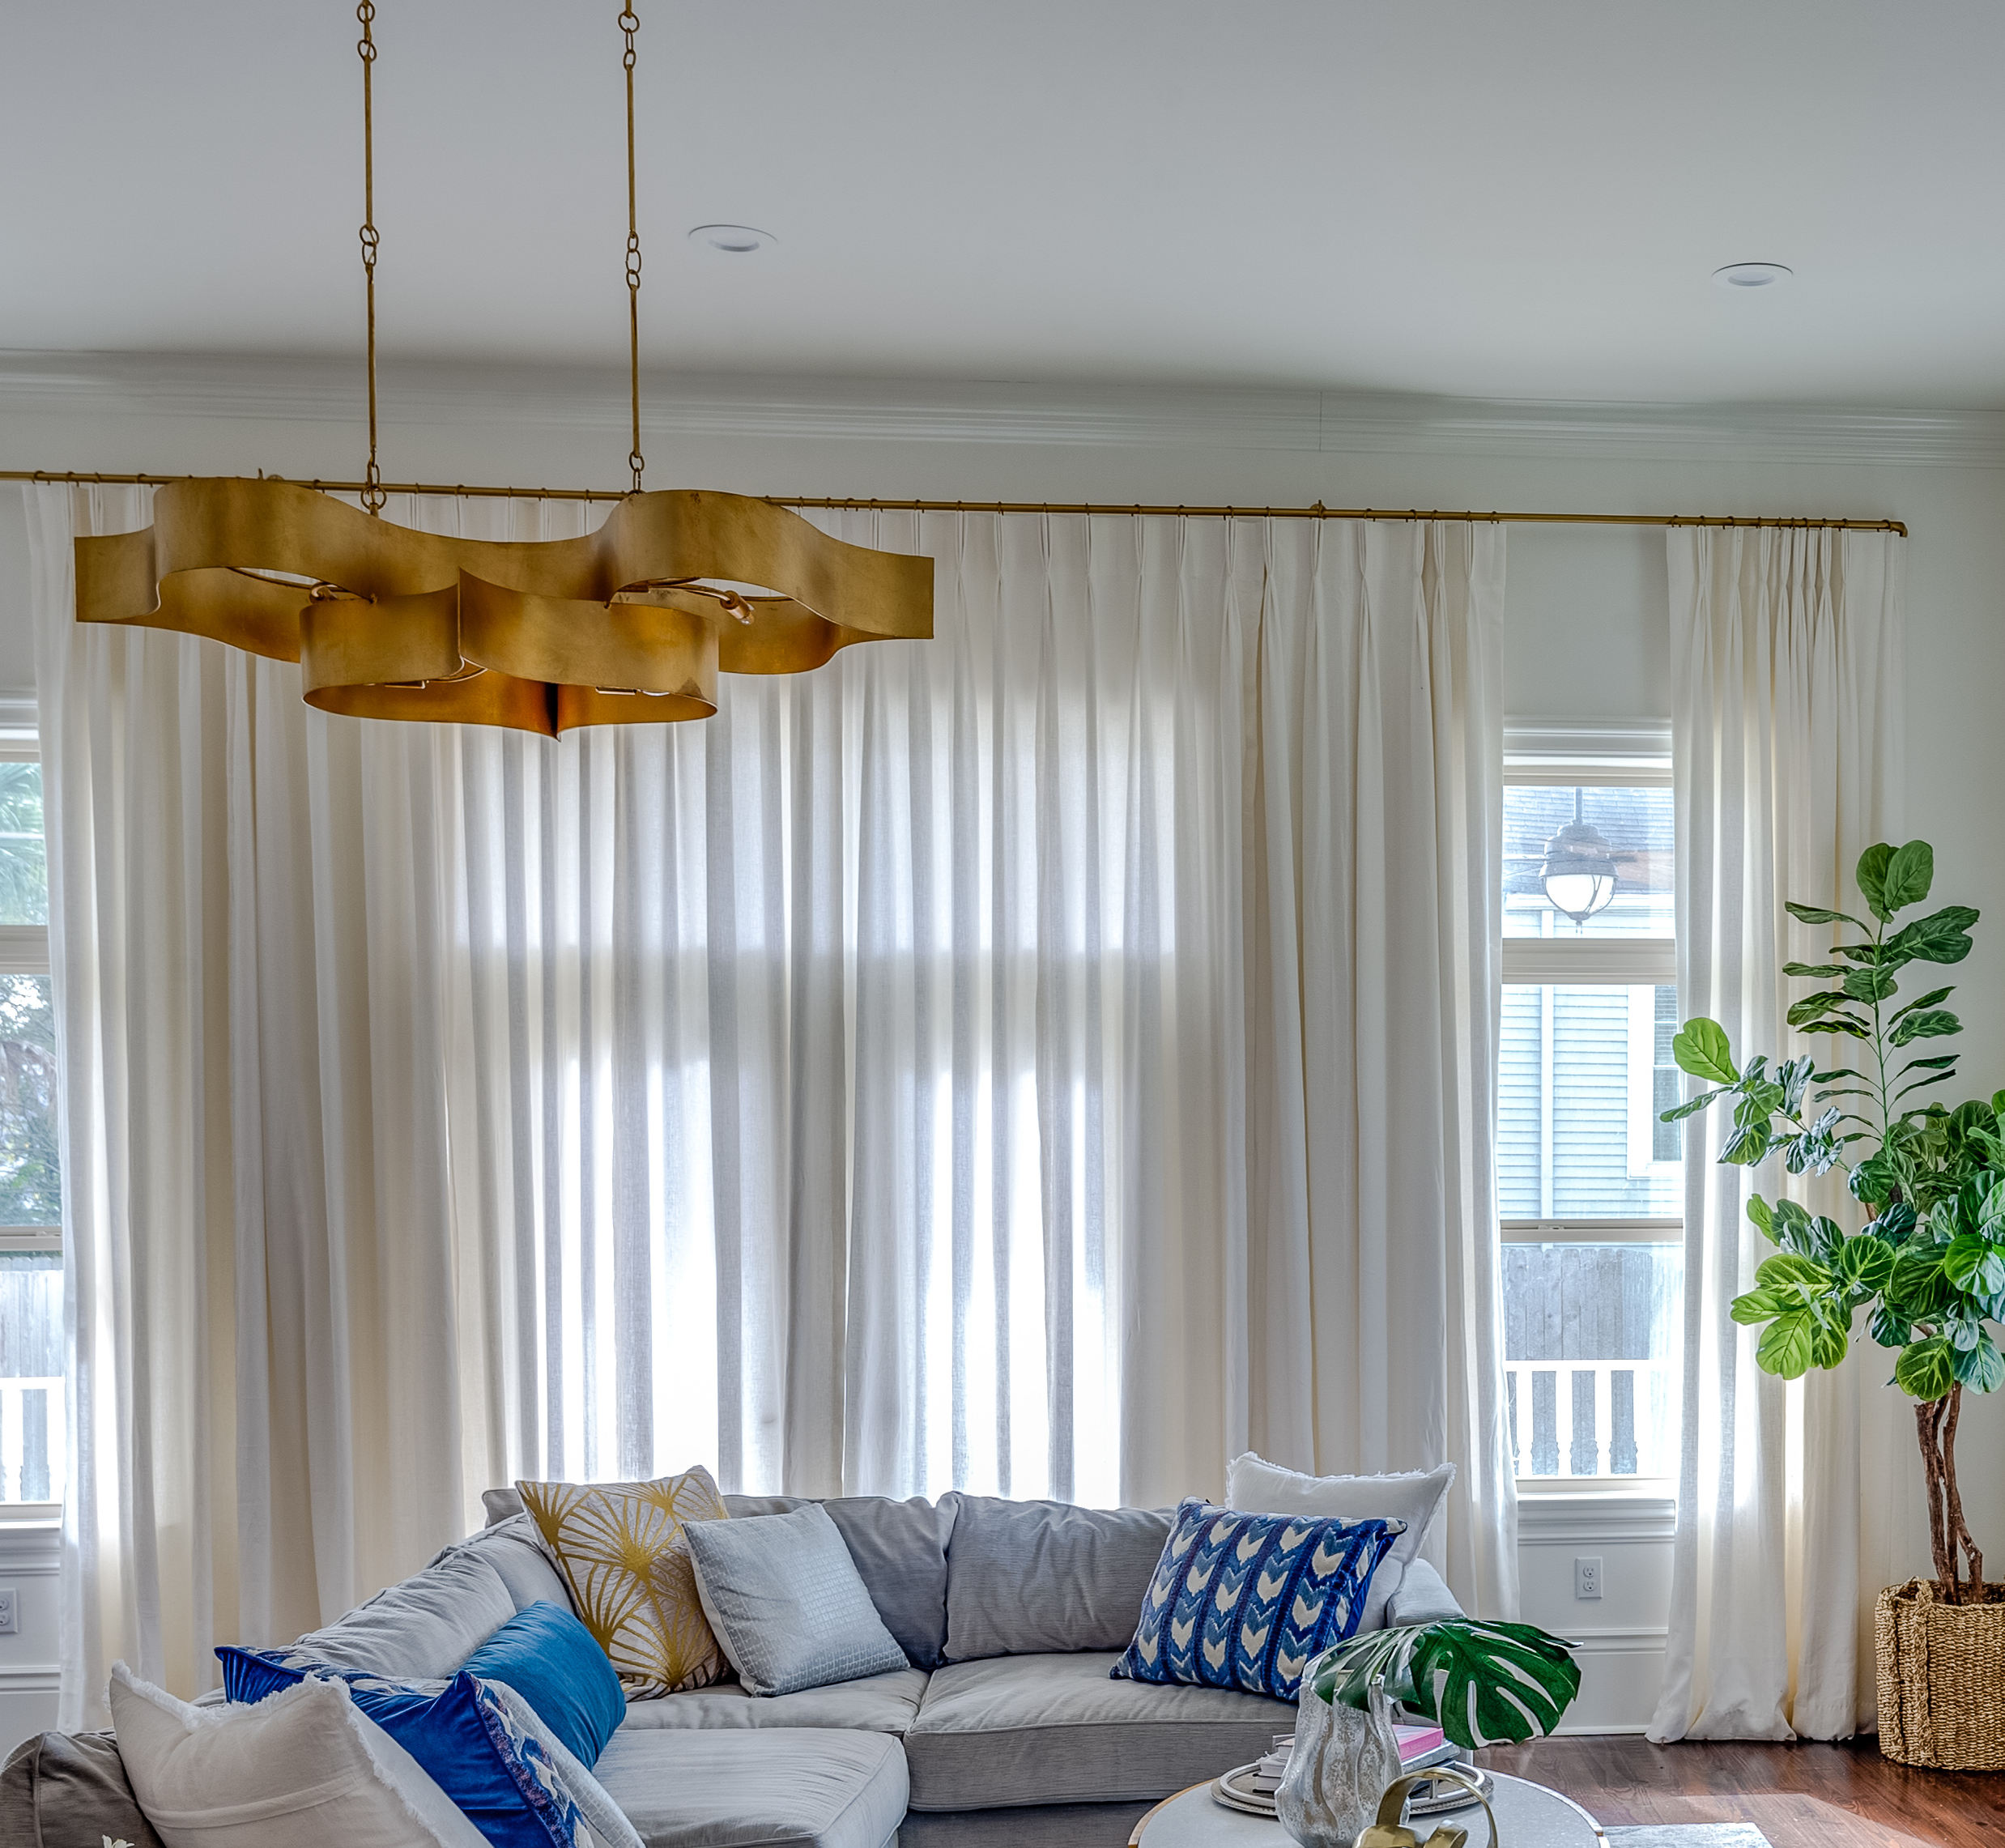 modern living room chandelier metairie luxury interior design khb interiors